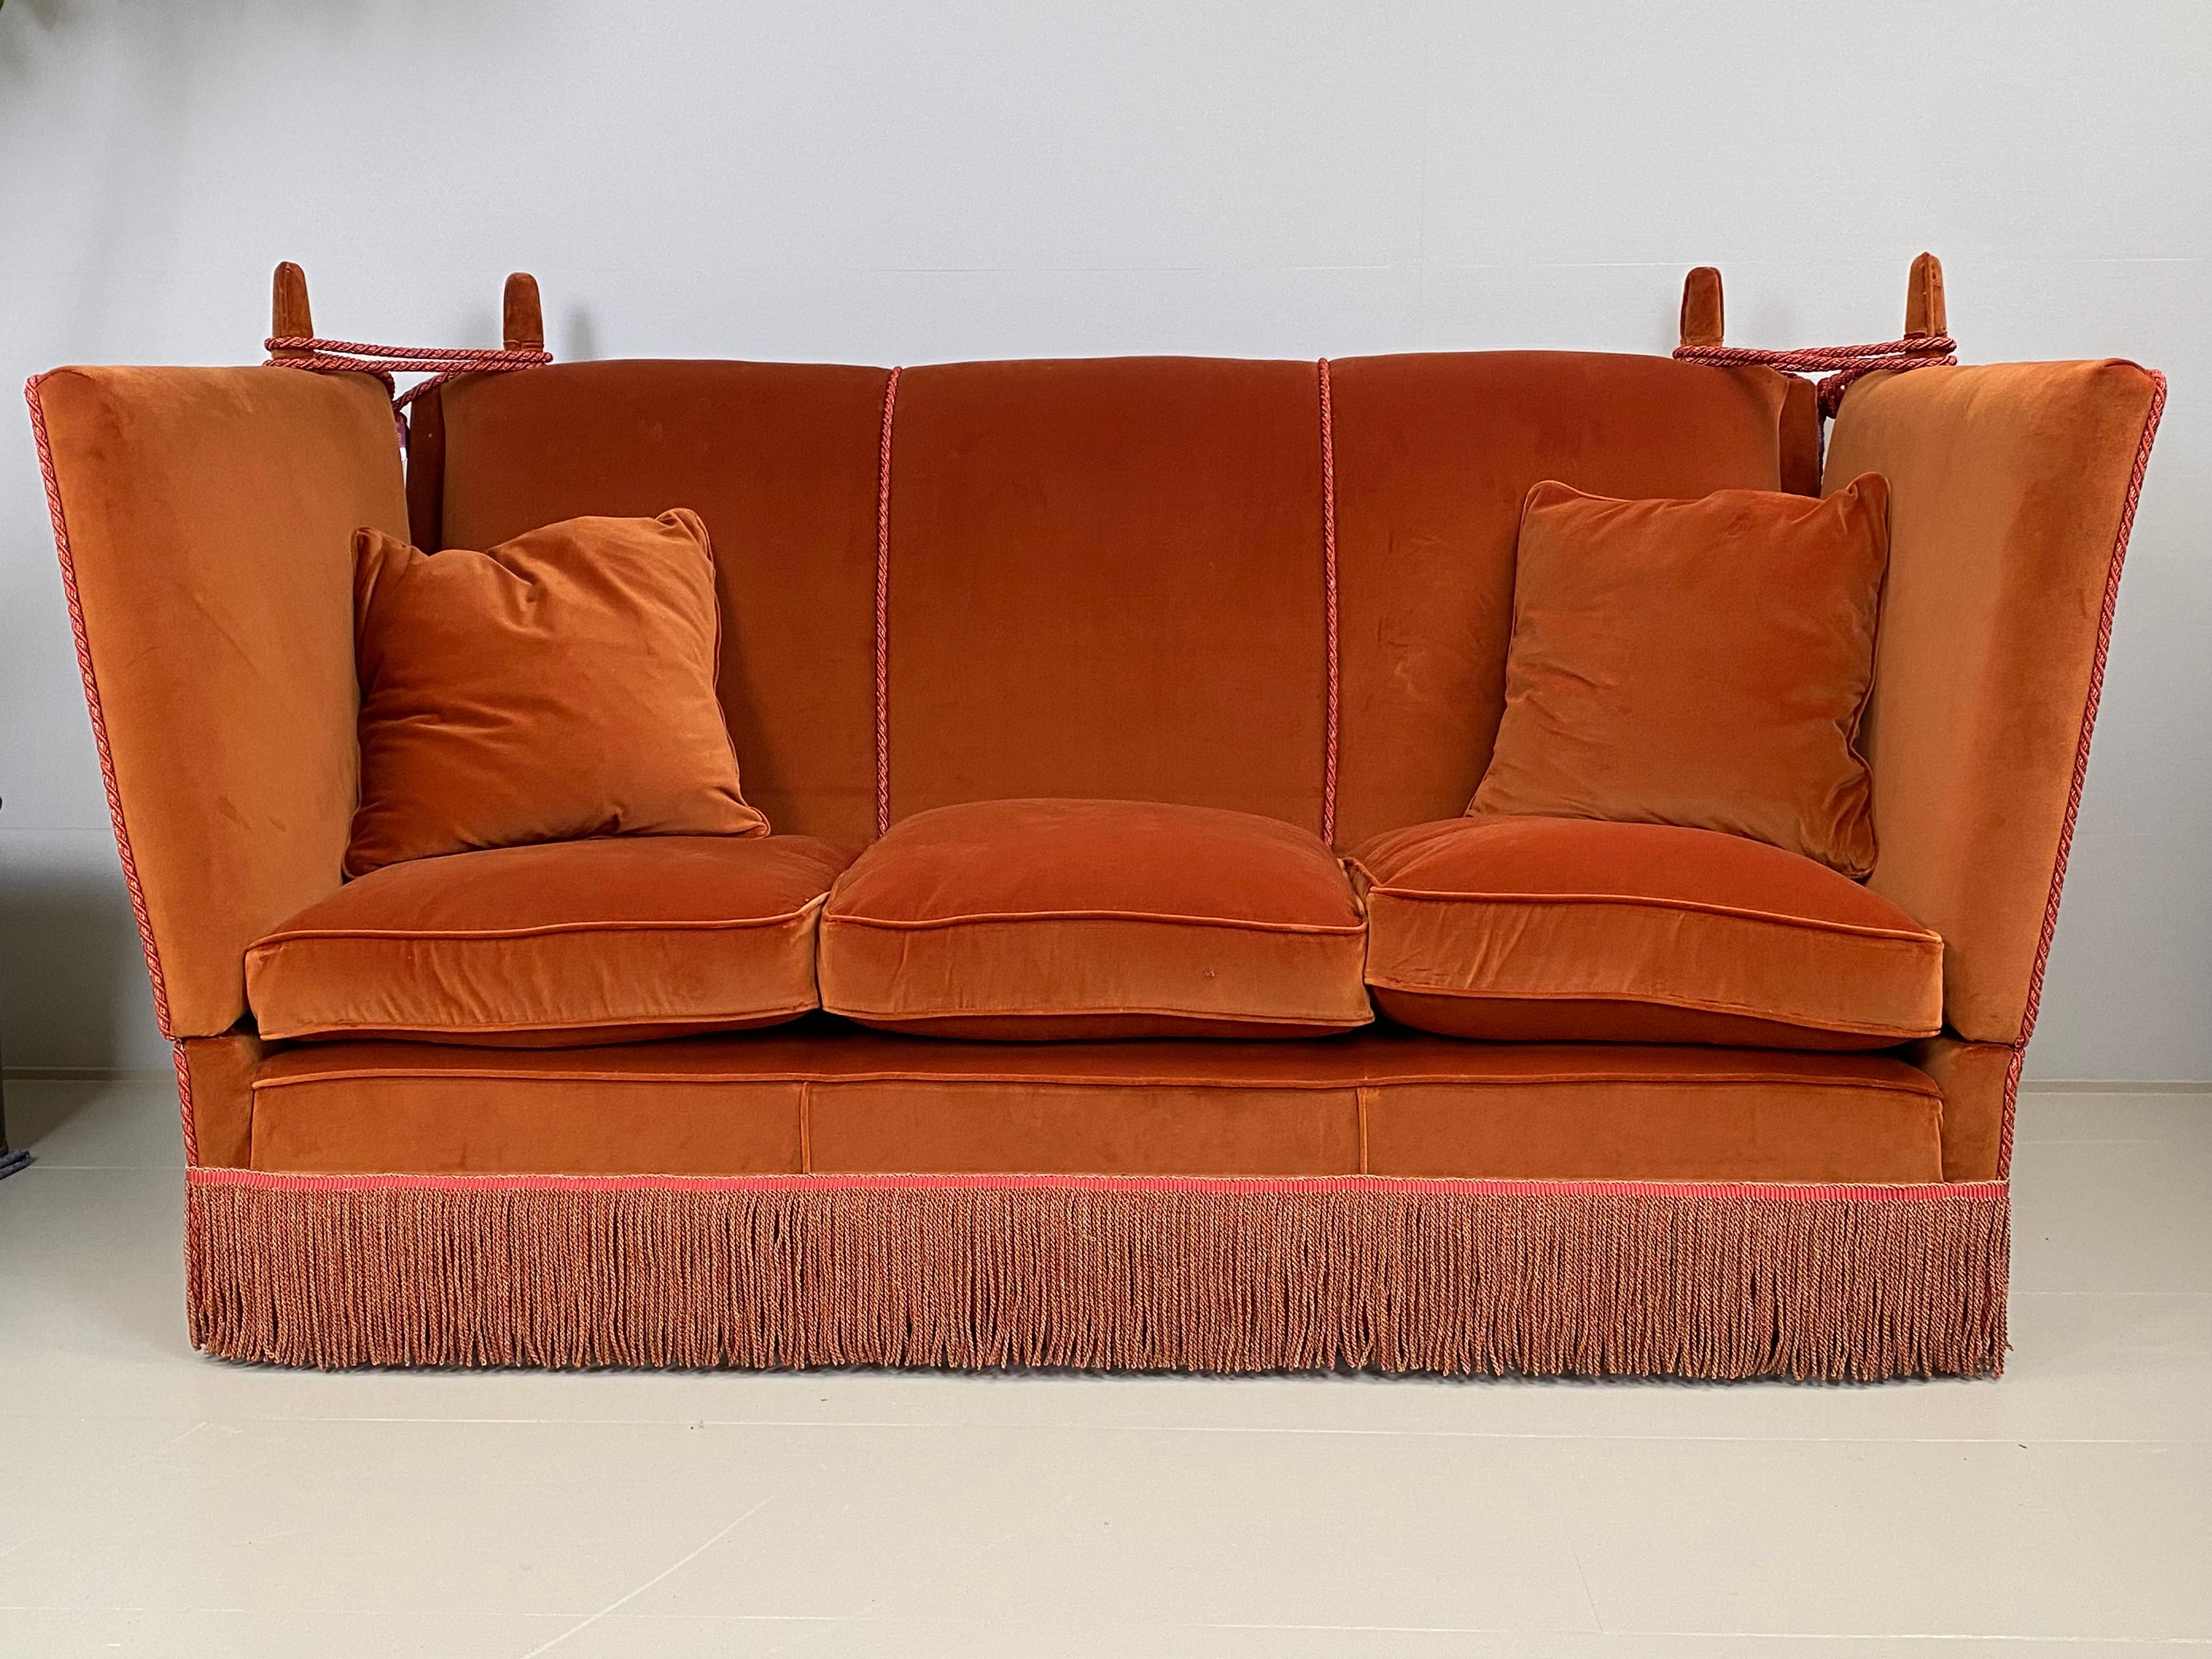 Beautiful English sofa, upholstered in an orange velvet,
mint condition,
great garnish.